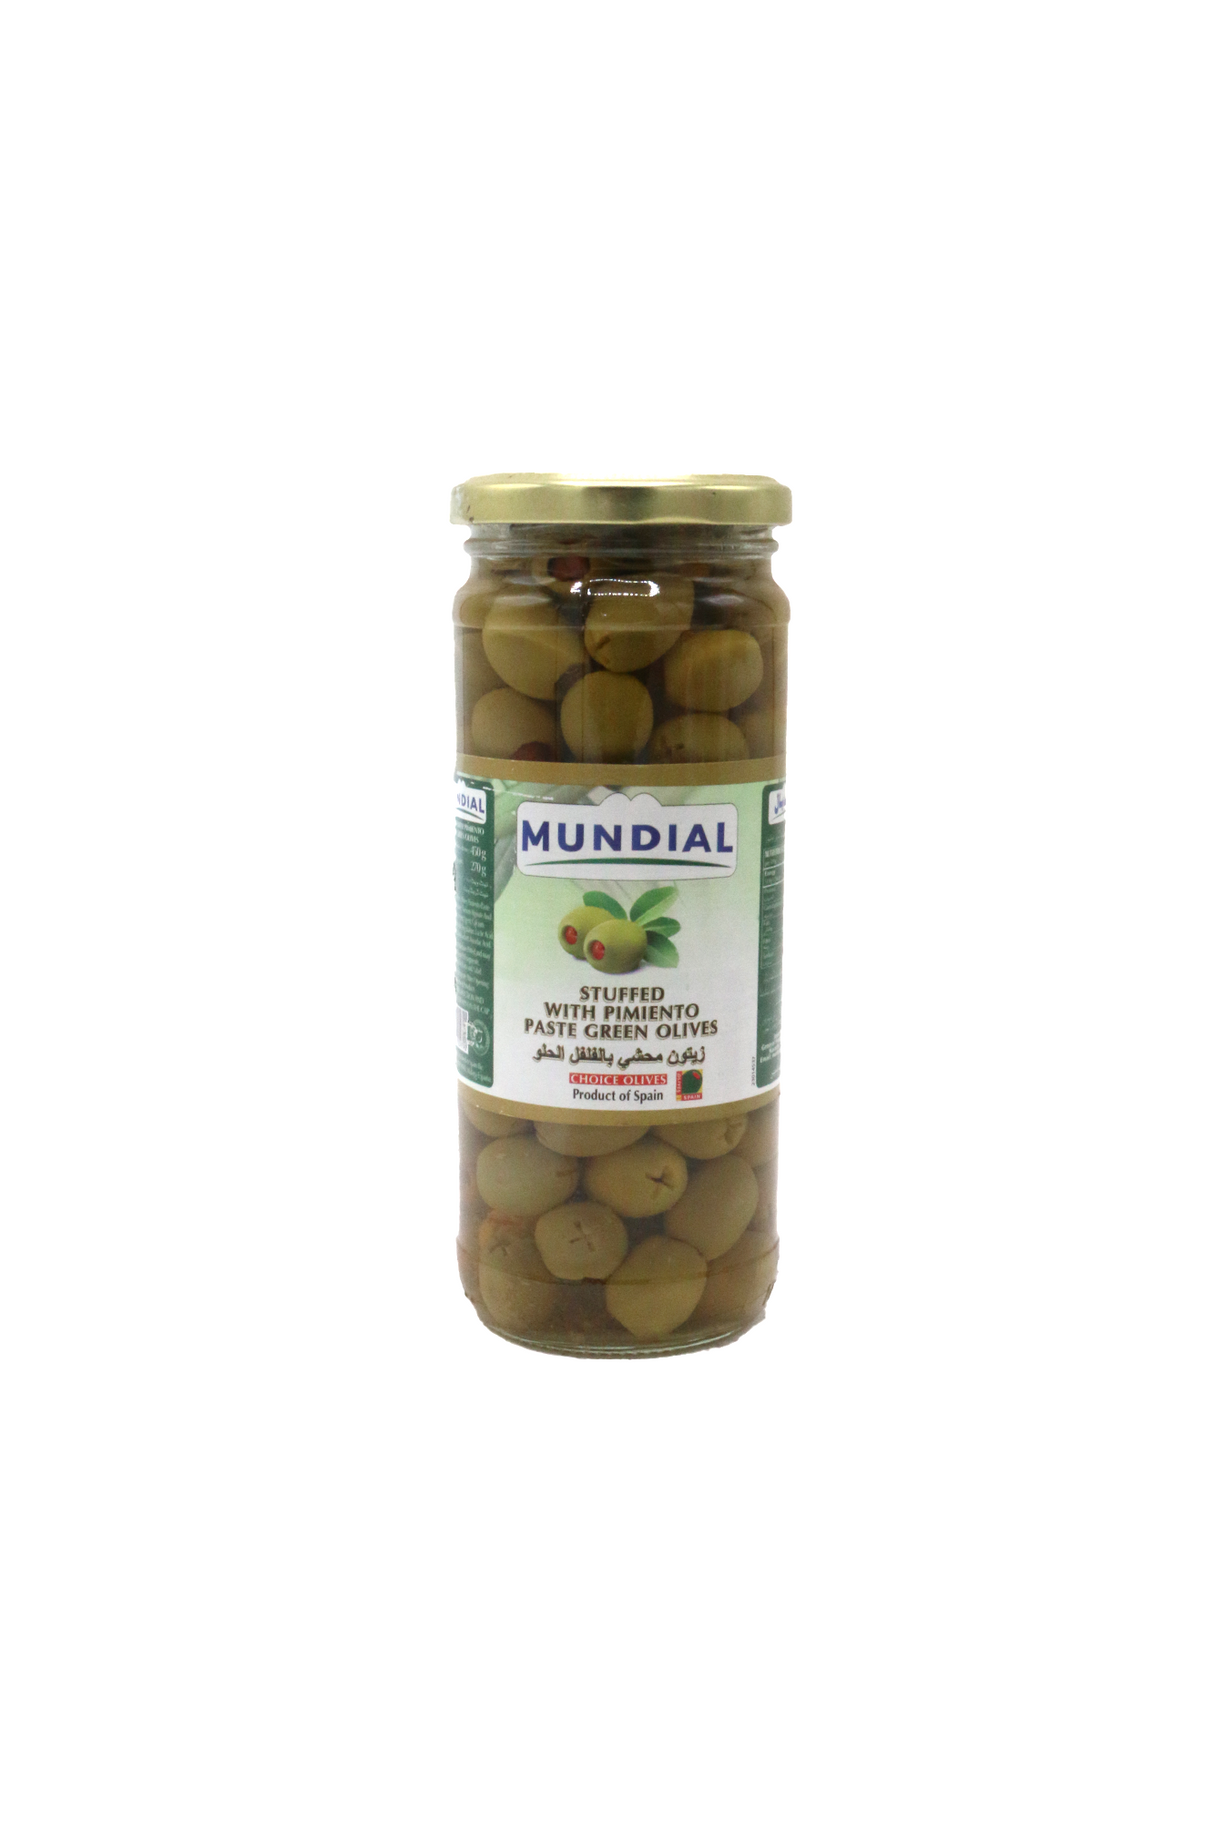 mundial olives green stuffed 450g